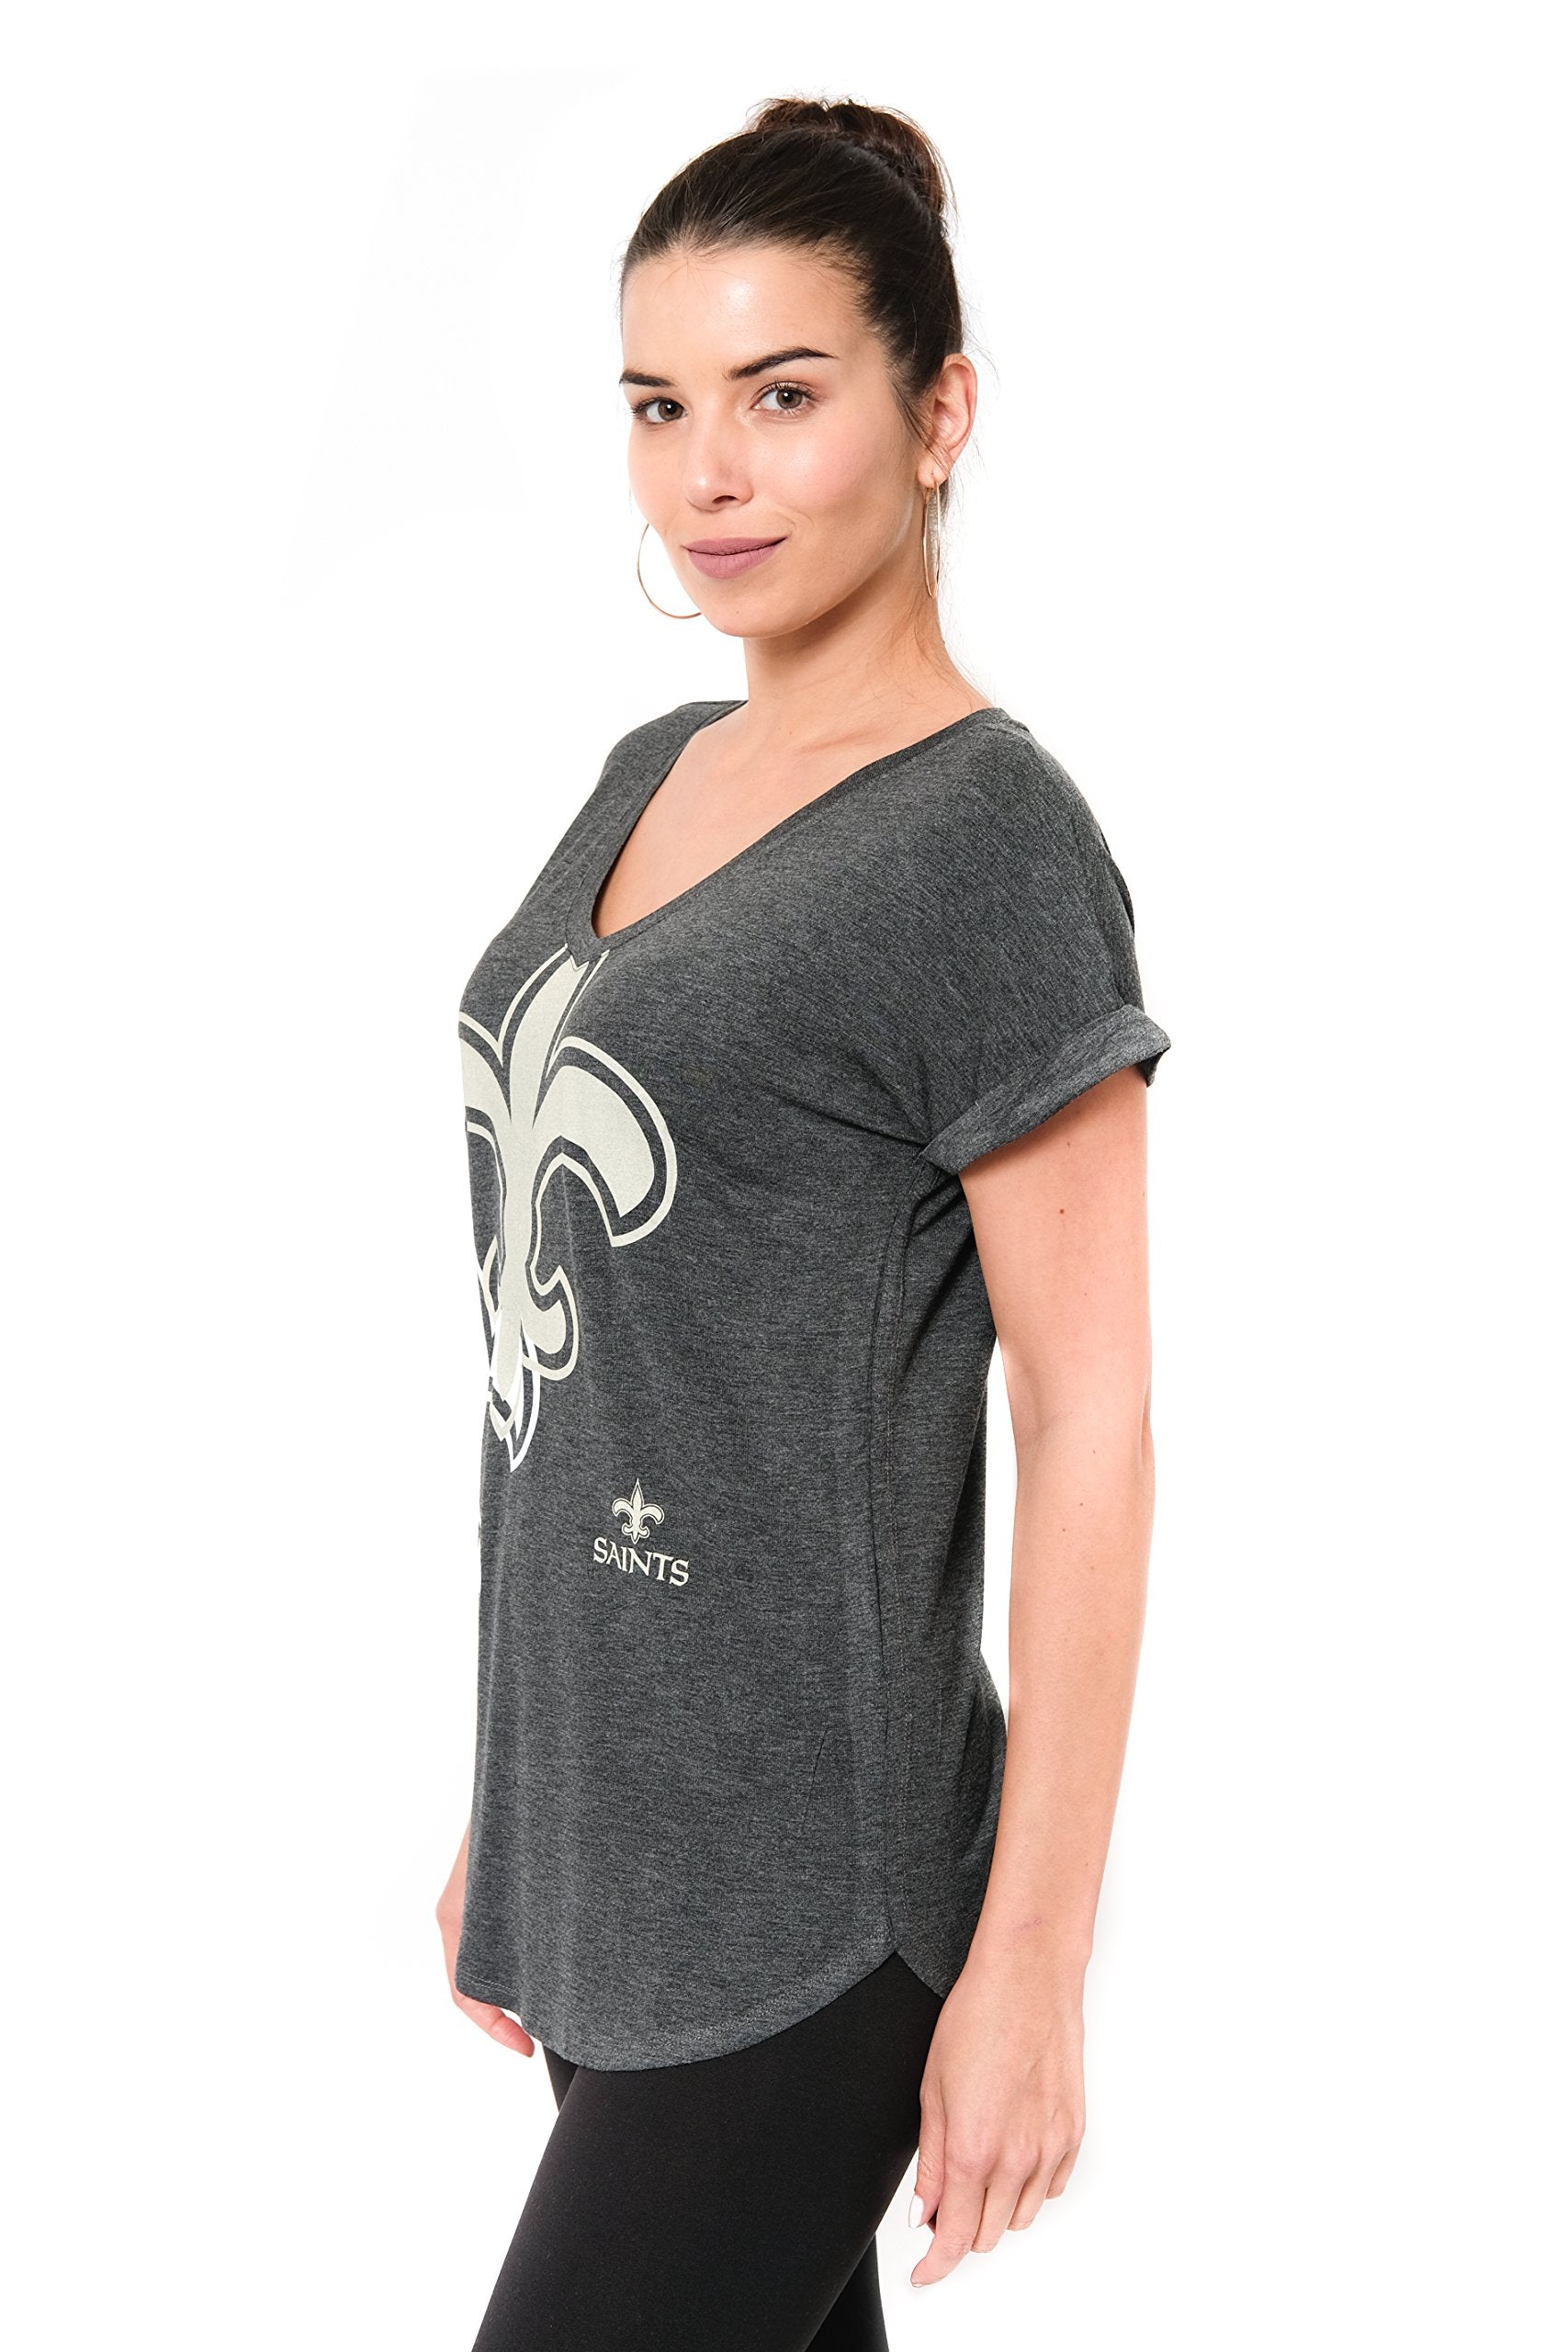 Ultra Game NFL New Orleans Saints Womens Vintage Stripe Soft Modal Tee Shirt|New Orleans Saints